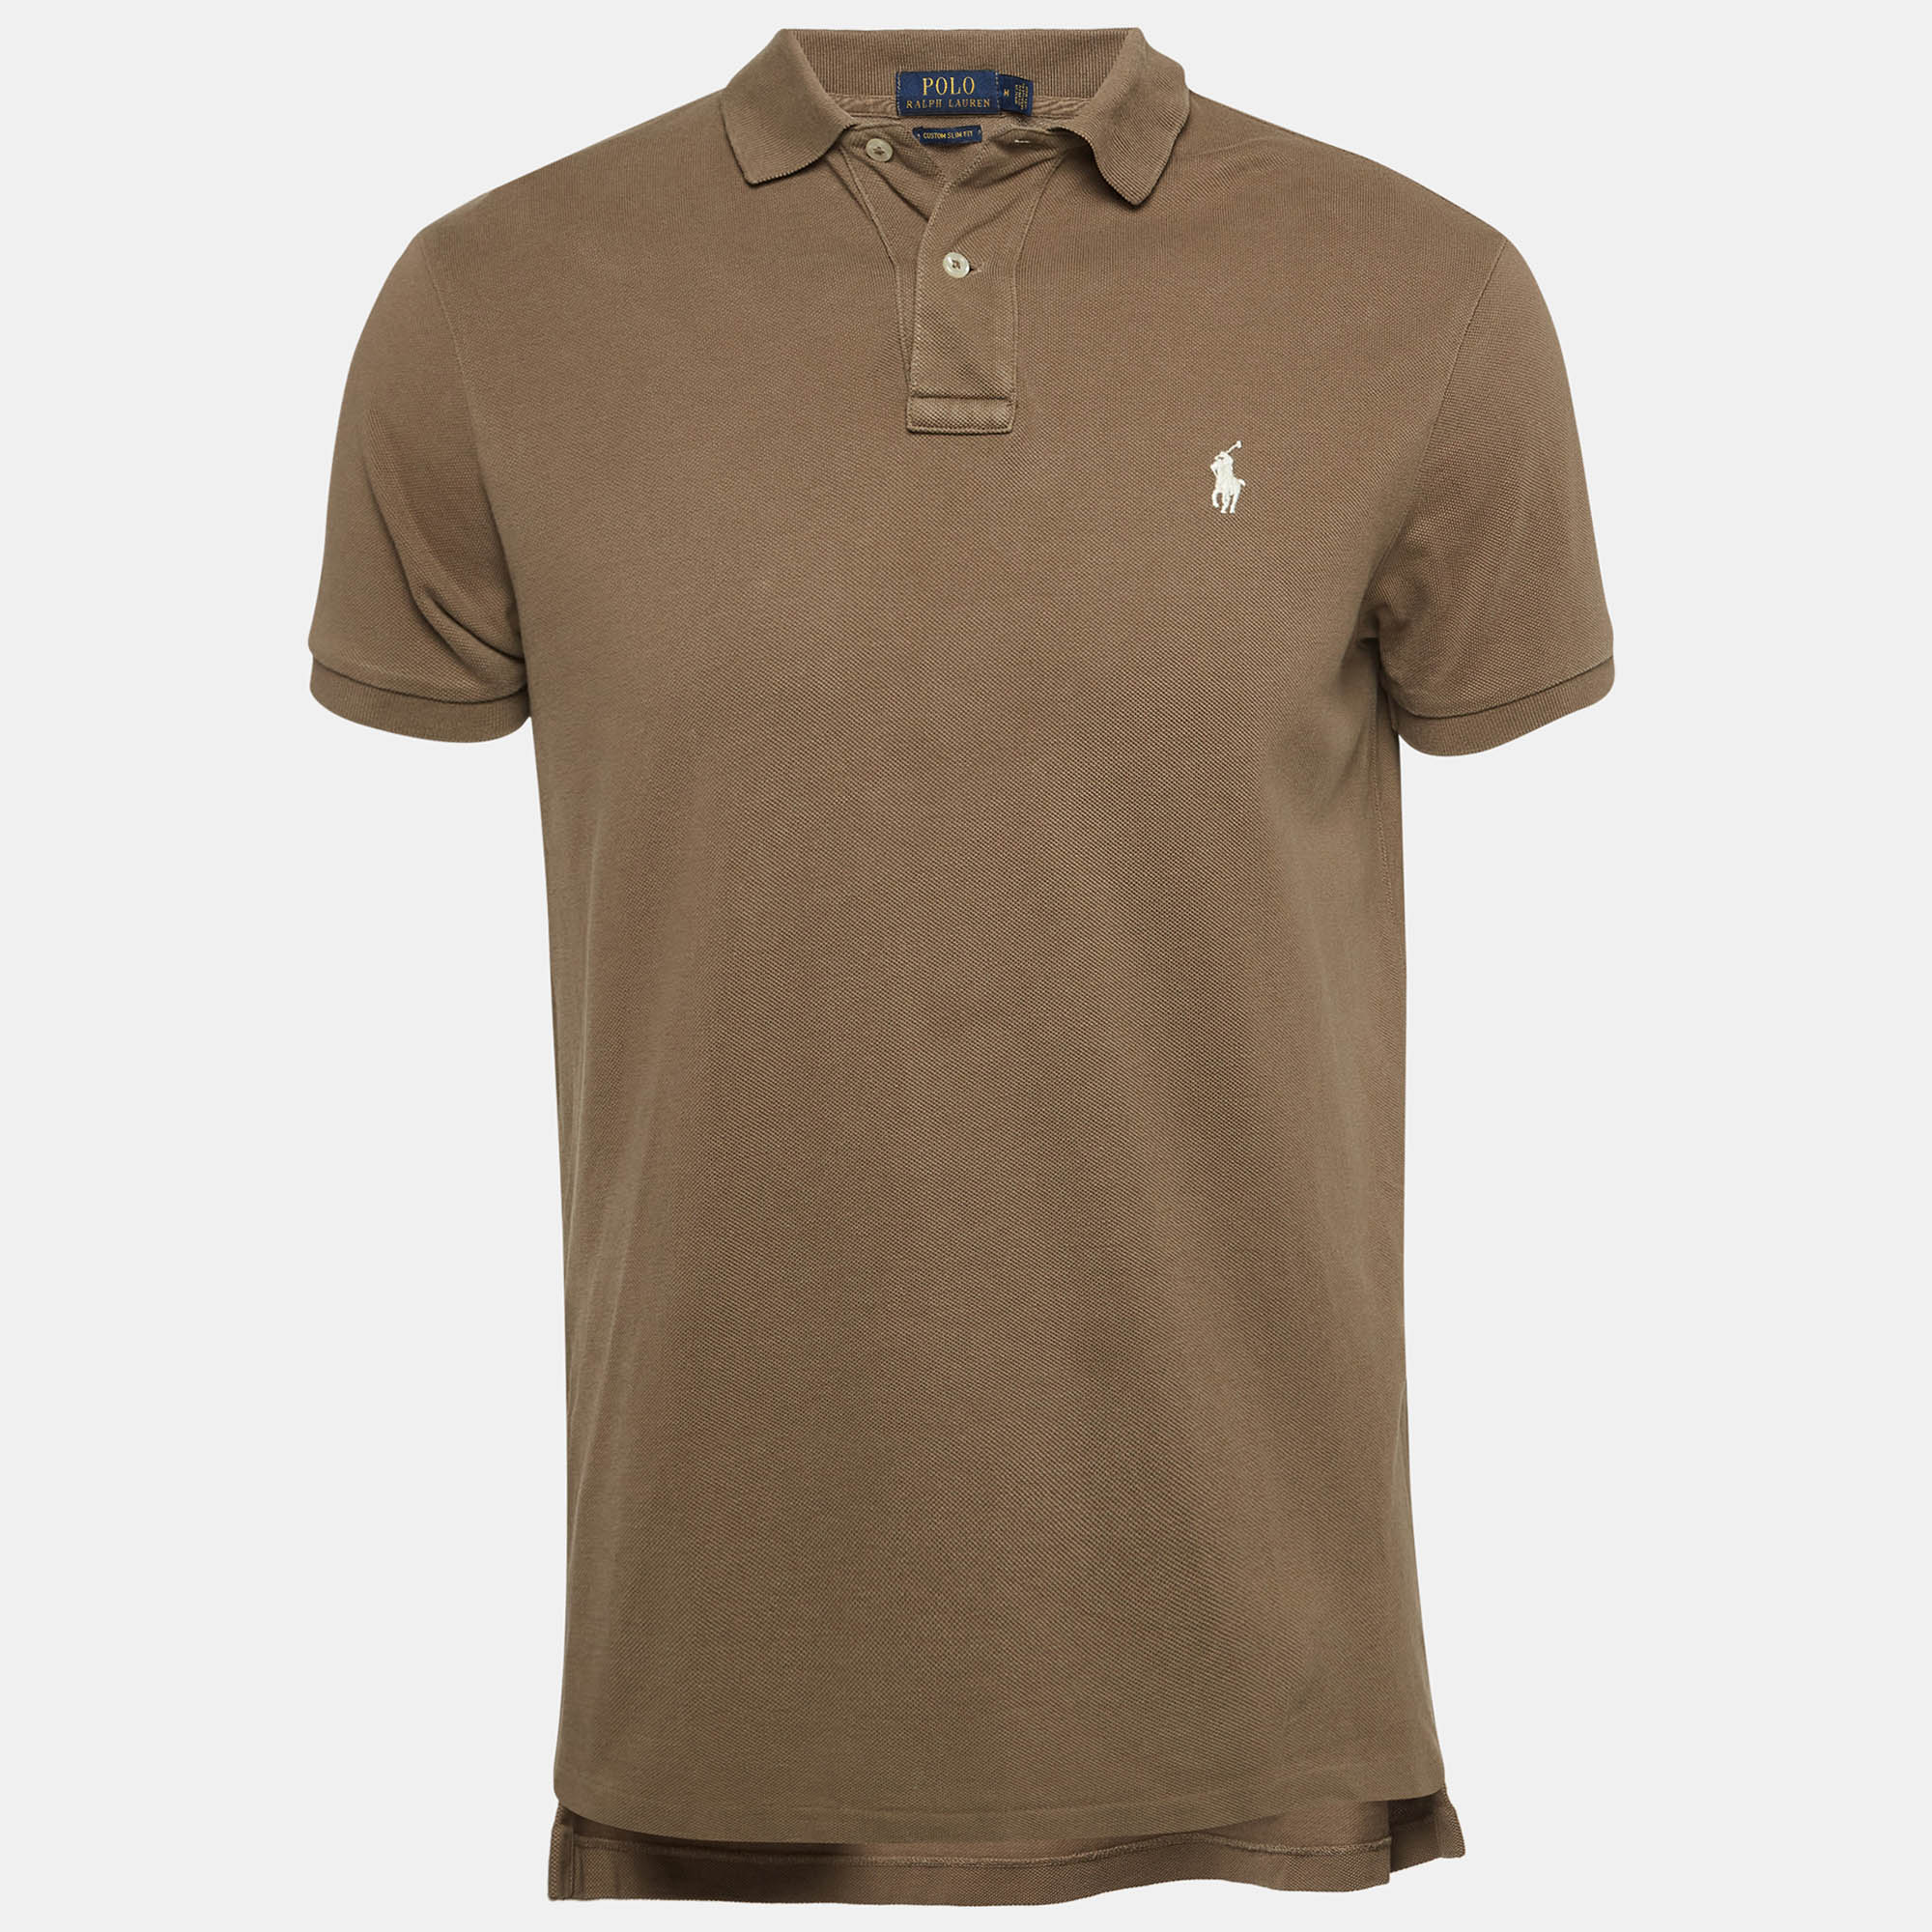 Polo ralph lauren brown cotton custom slim fit polo t-shirt m